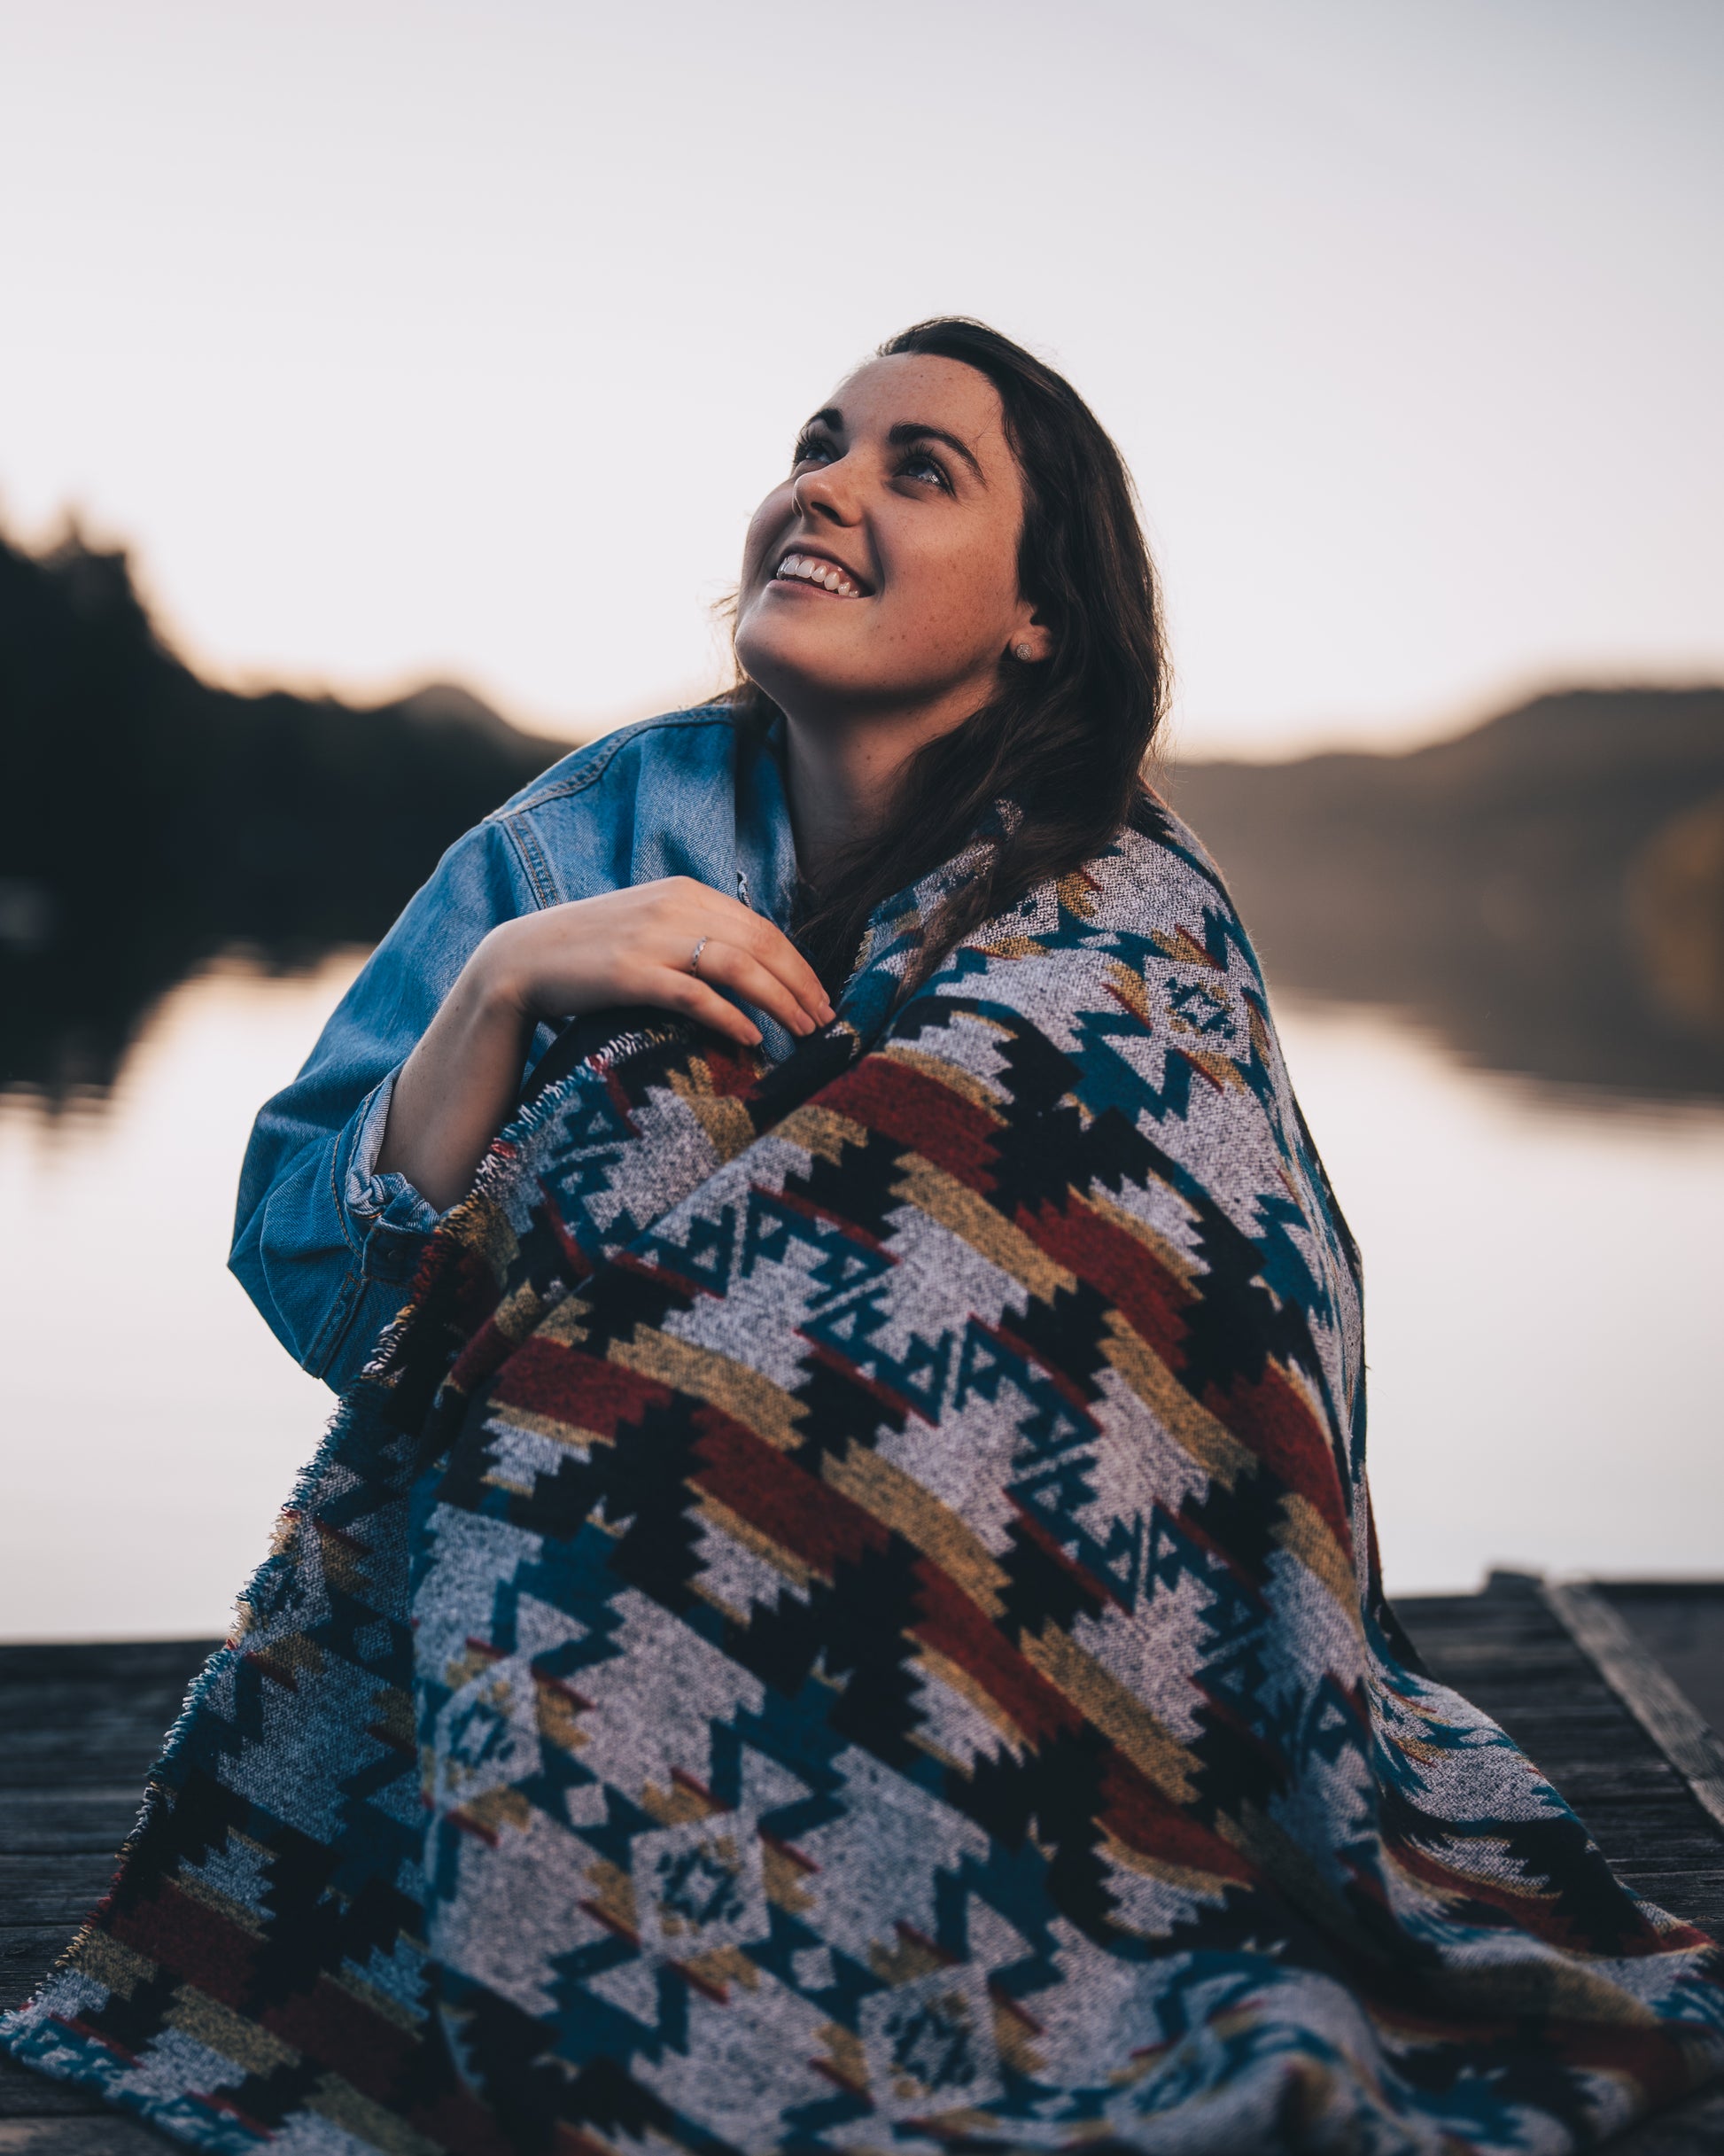 Picnic blanket, enjoy sunset on the lake